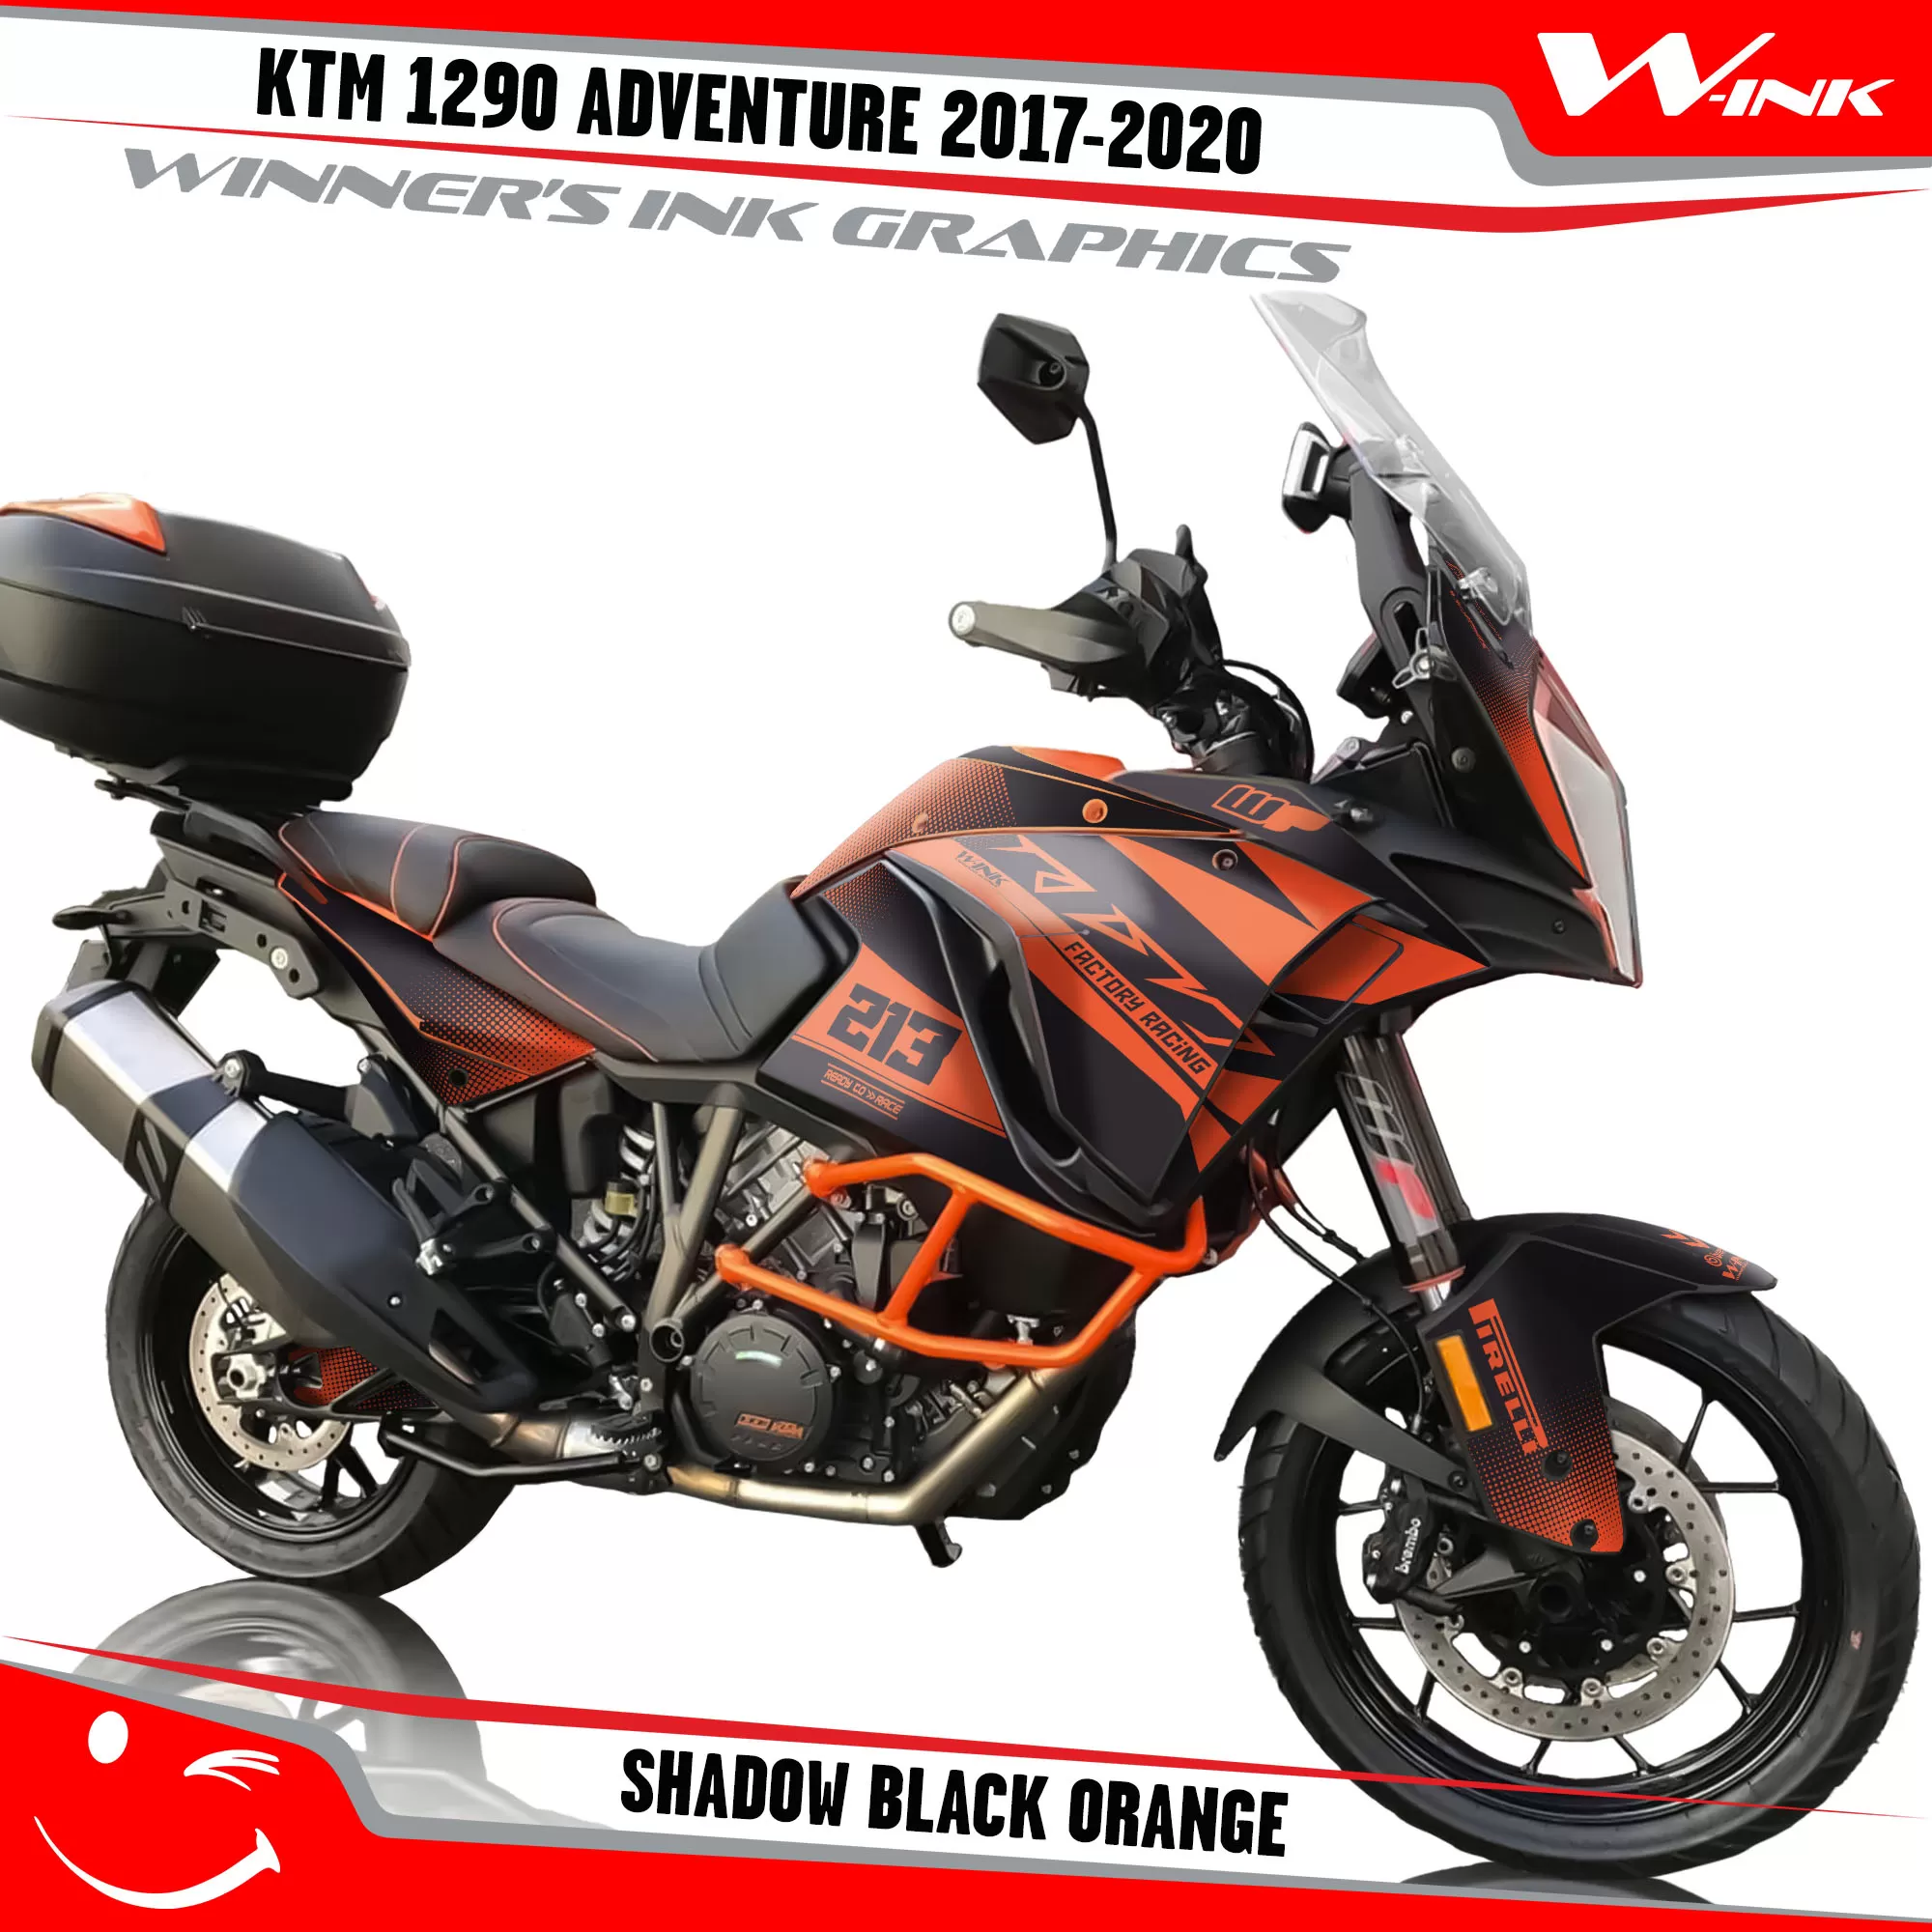 KTM-Adventure-1290-2017-2018-2019-2020-graphics-kit-and-decals-Shadow-Black-Orange